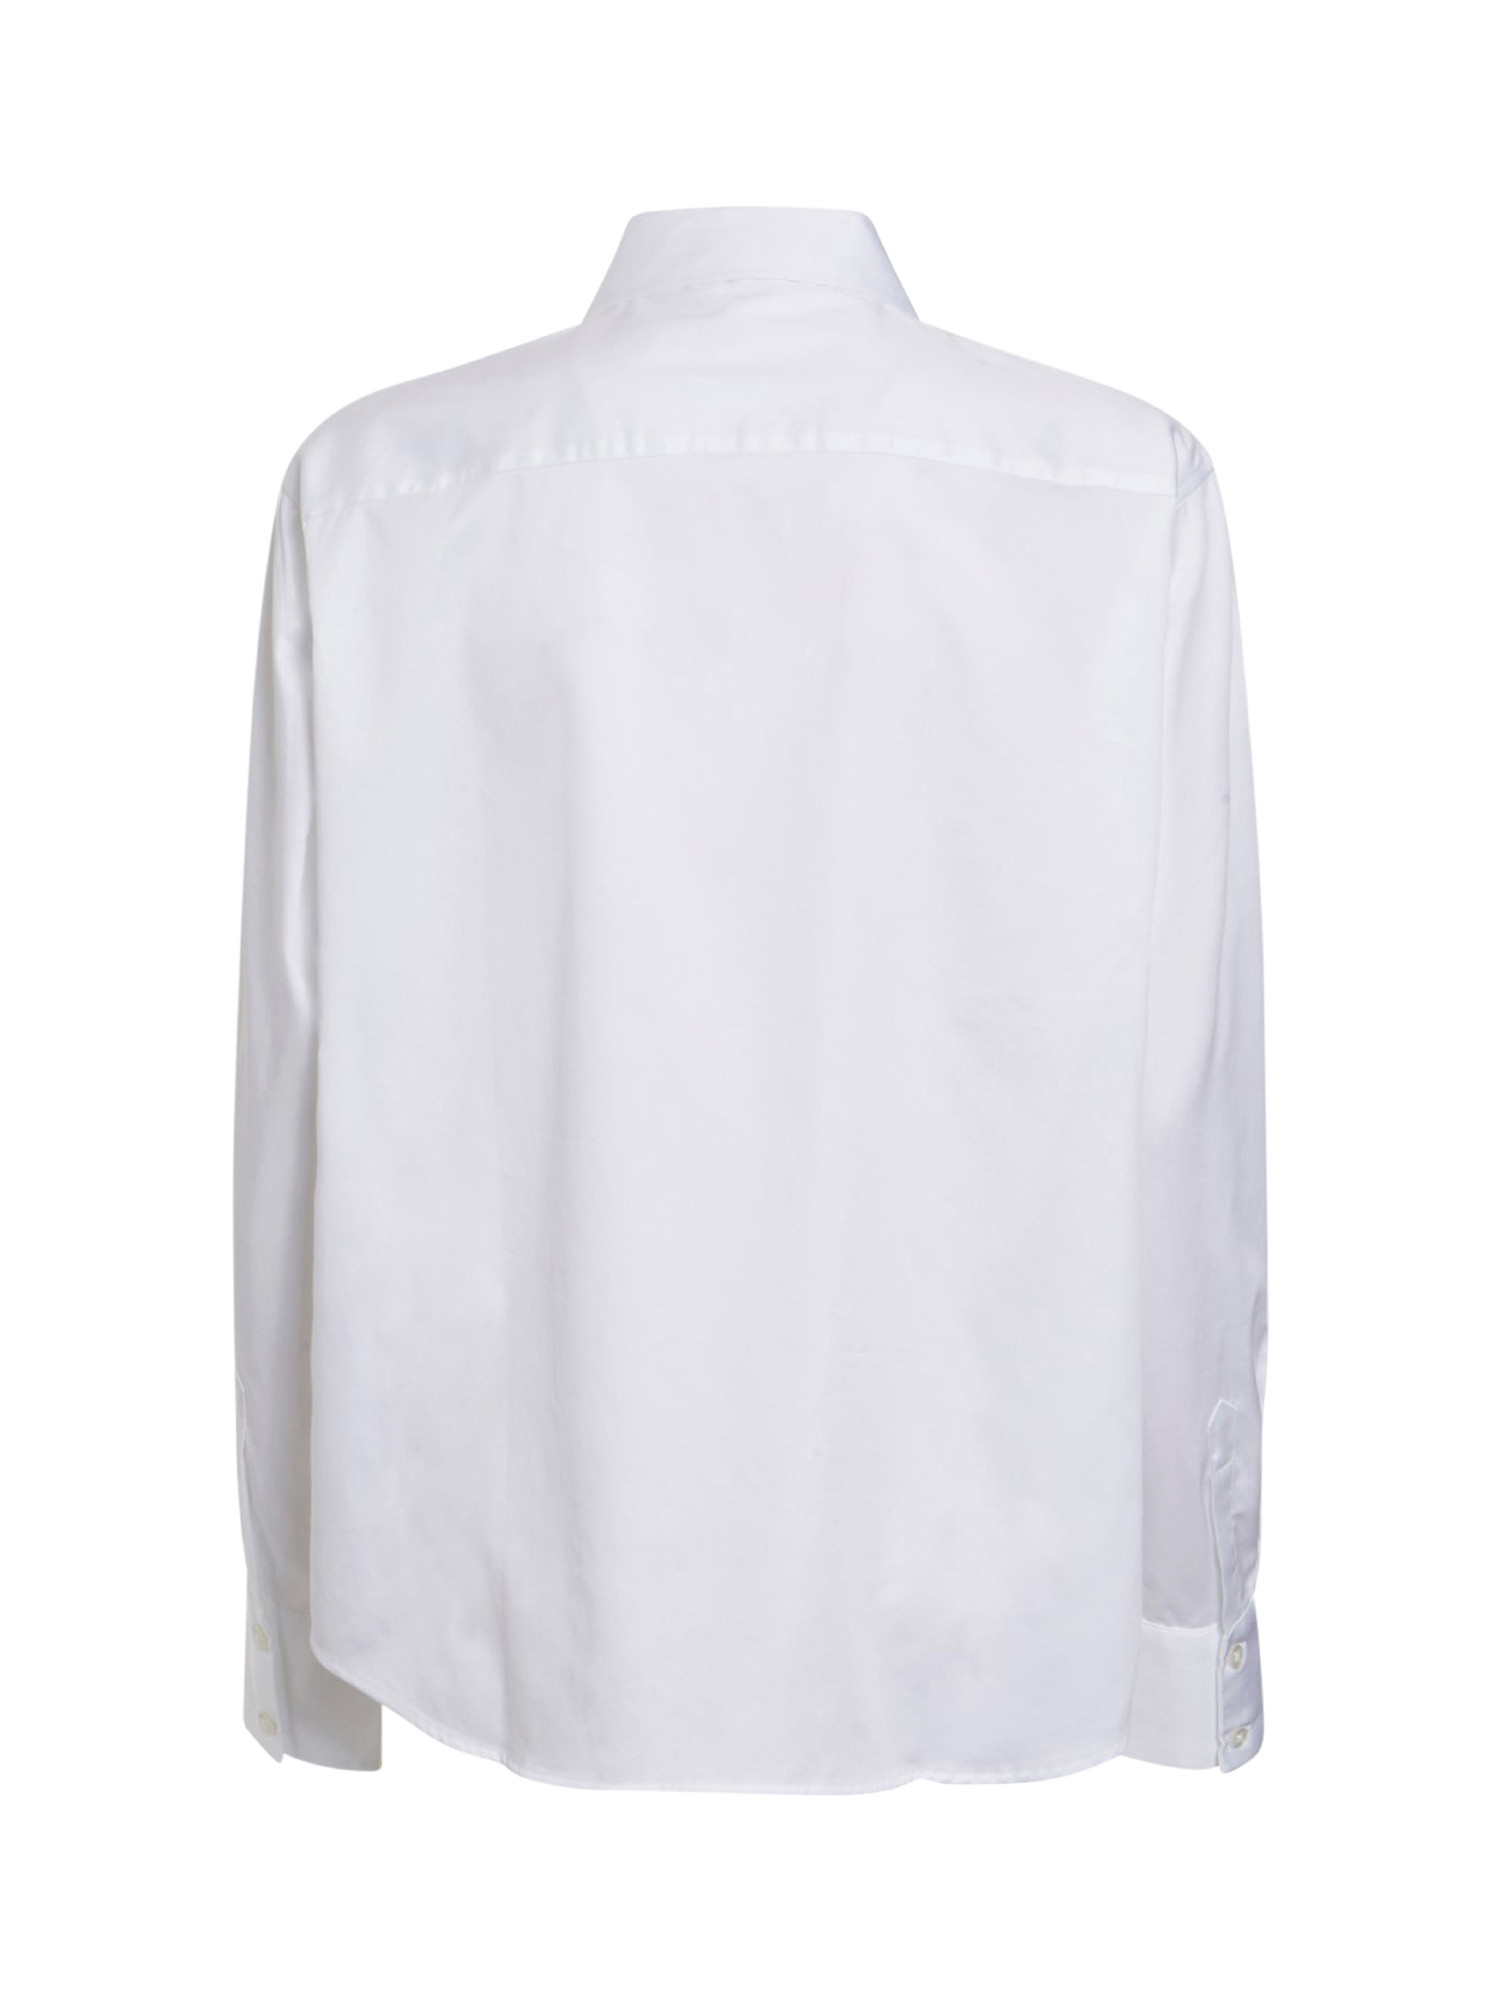 Camicia manica lunga, Bianco, large image number 1